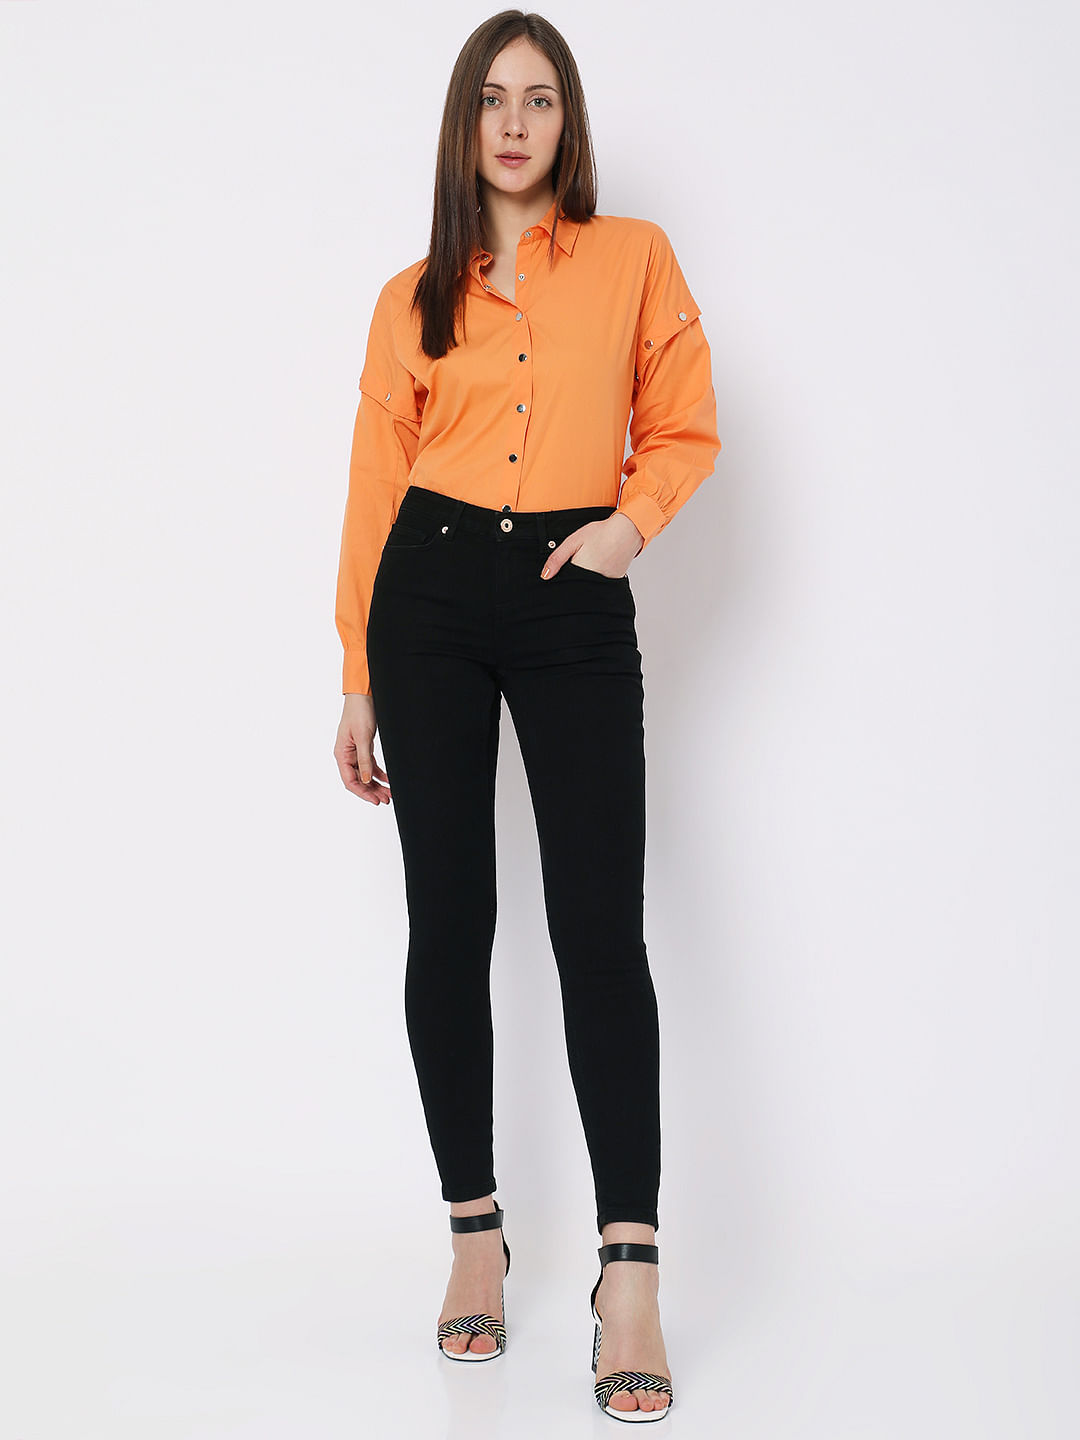 Top more than 193 orange skinny jeans womens super hot